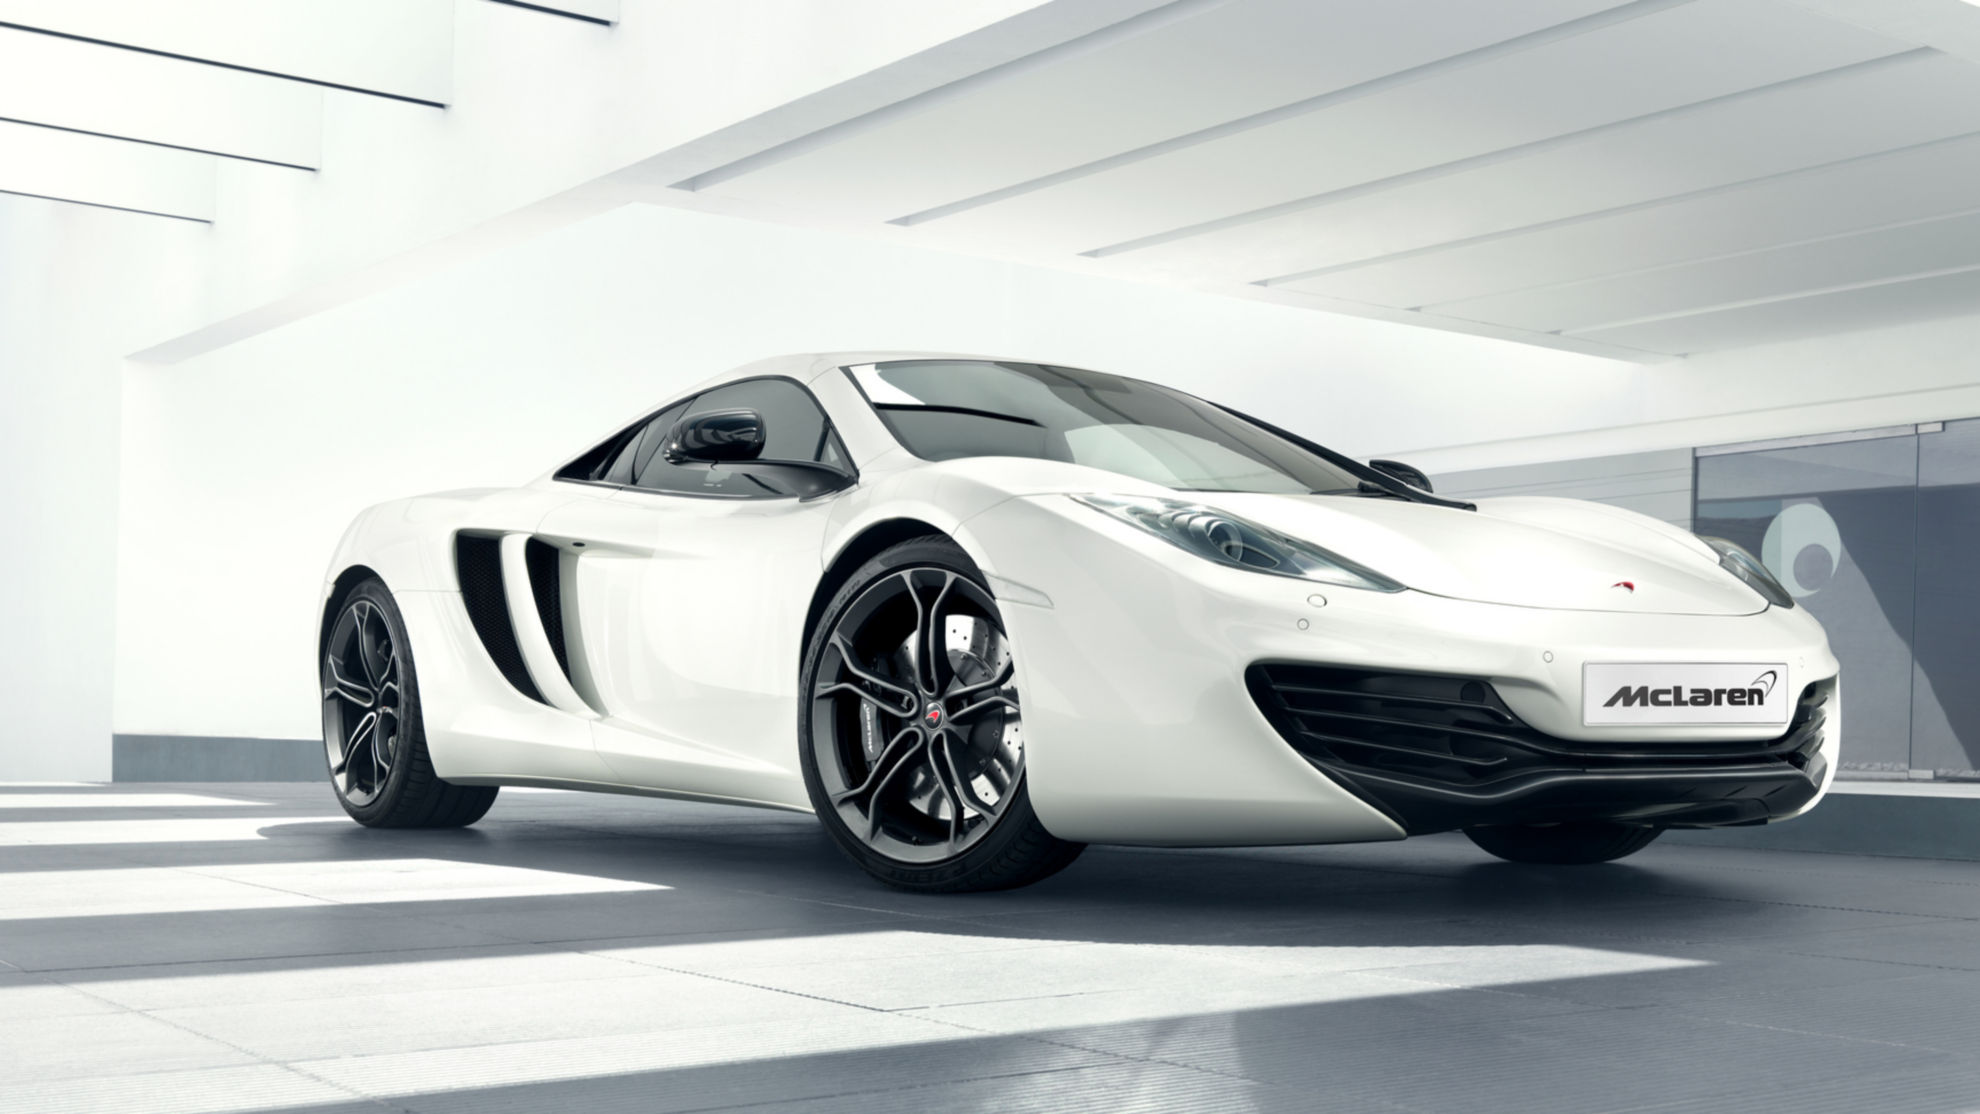 McLaren 12C - Formula 1 Inspired & Engineering-led Supercar | McLaren  Automotive